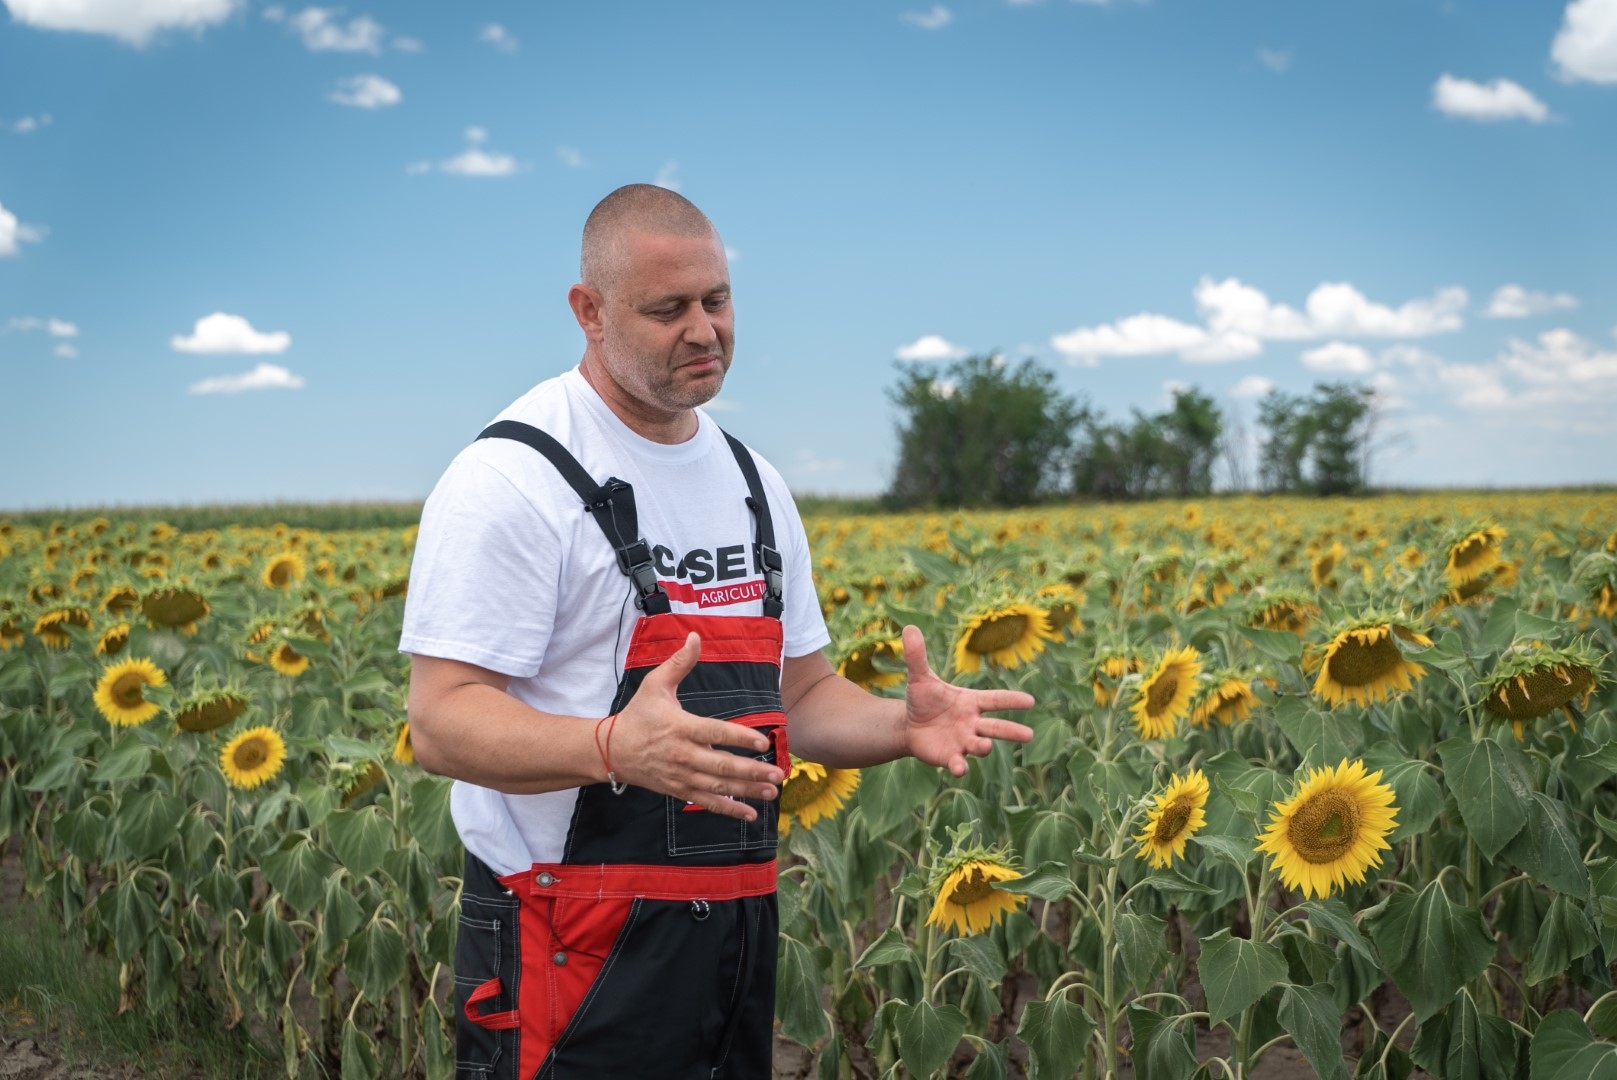 case-ih-Nikolay-Tsenkov-farmer-harvest